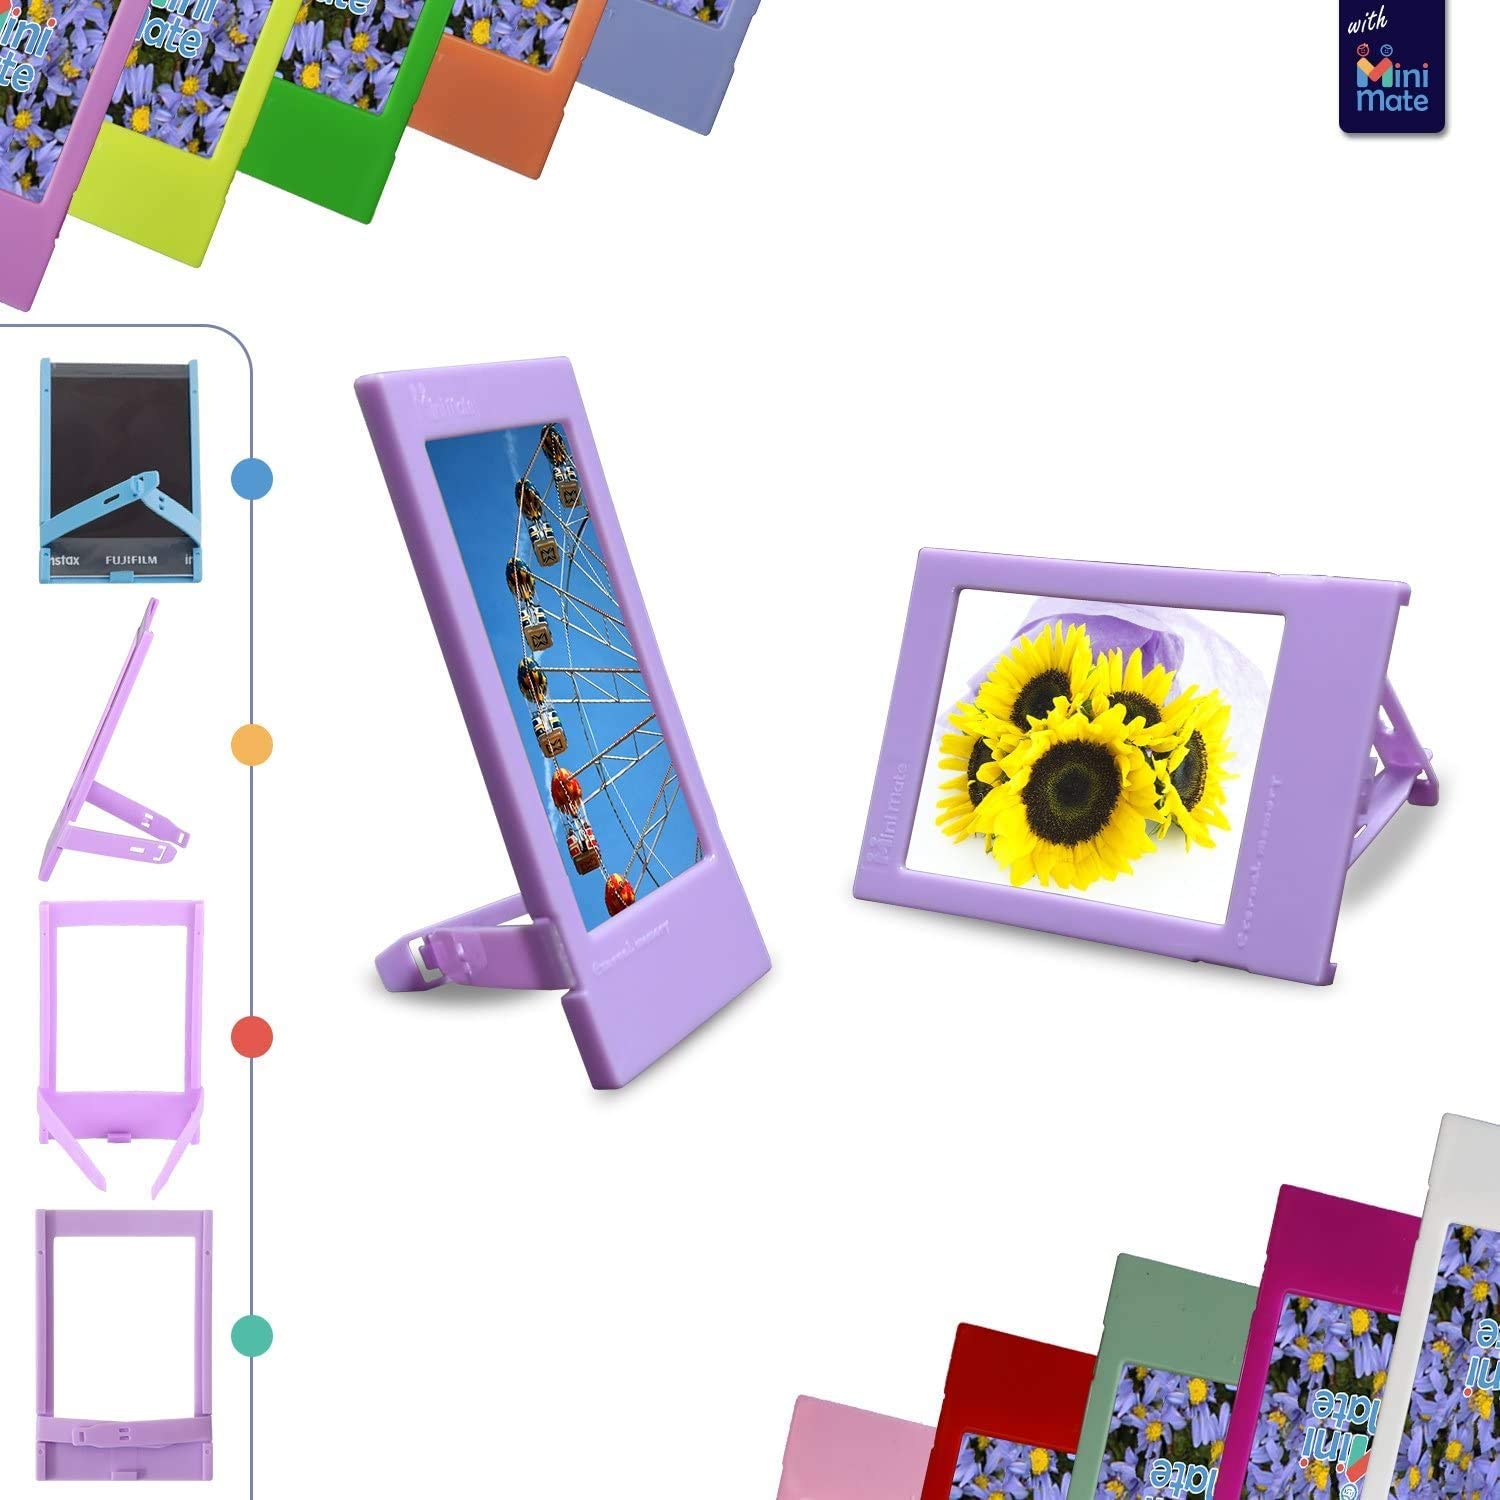 Fujifilm Instax Mini 11 Instant Camera Lilac Purple + MiniMate Accessories Bundle + Fuji Instax Film Value Pack (40 Sheets) Accessories Bundle, Color Filters, Album, Frames (Lilac Purple, Standard Packaging)